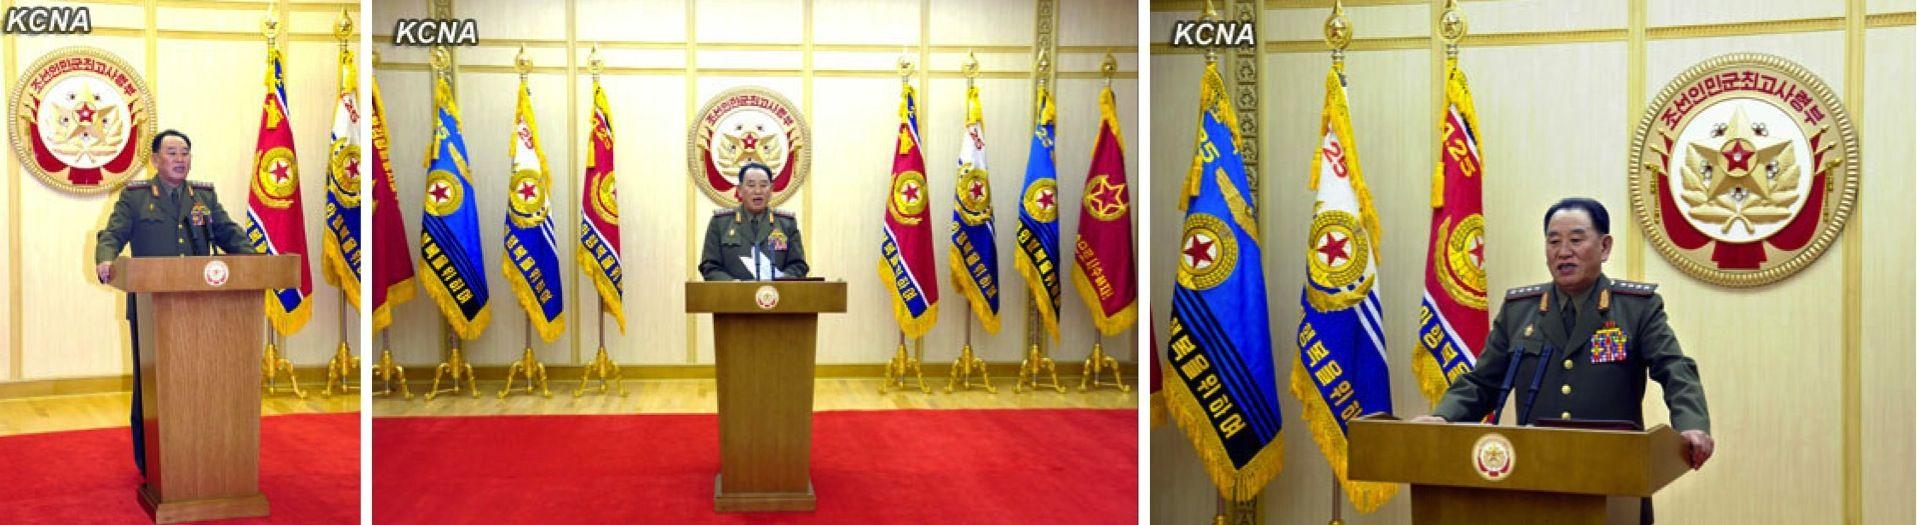 Supreme Commander in Korea Logo - KPA Supreme Command Threatens to “Nullify” Armistice Agreement ...